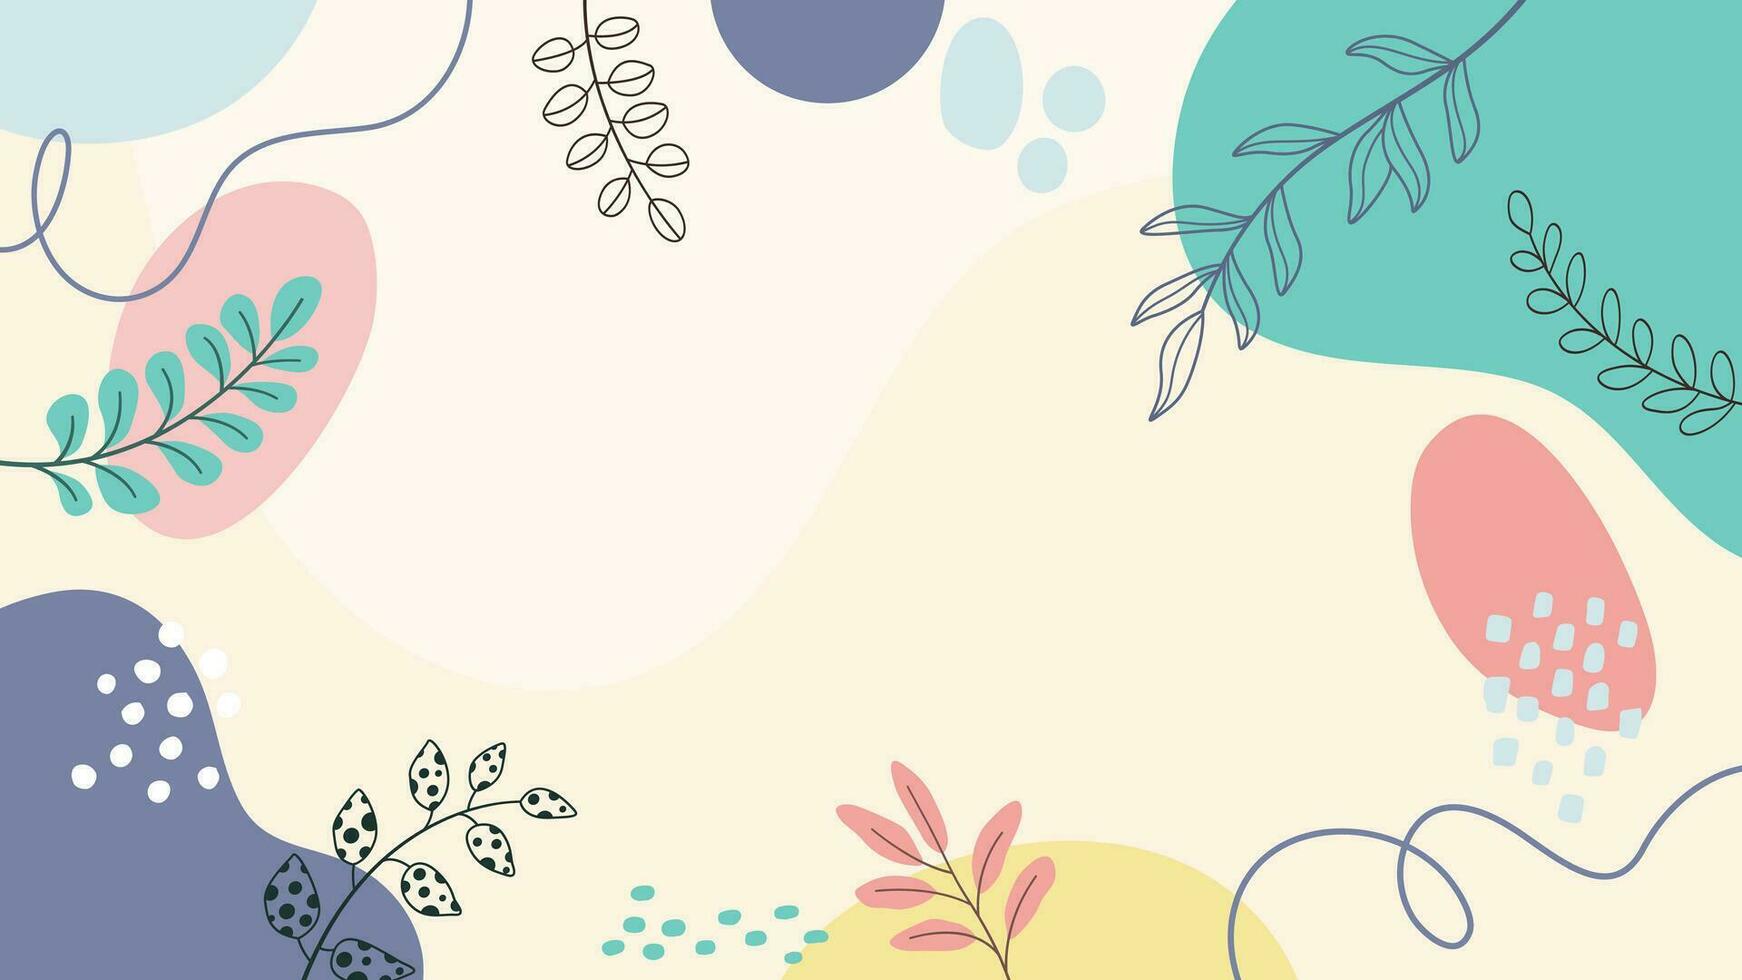 projeto banner frame background .colorful poster background vector illustration.exotic plantas, ramos, arte imprimir para beleza, moda e produtos naturais, bem-estar, casamento e evento.